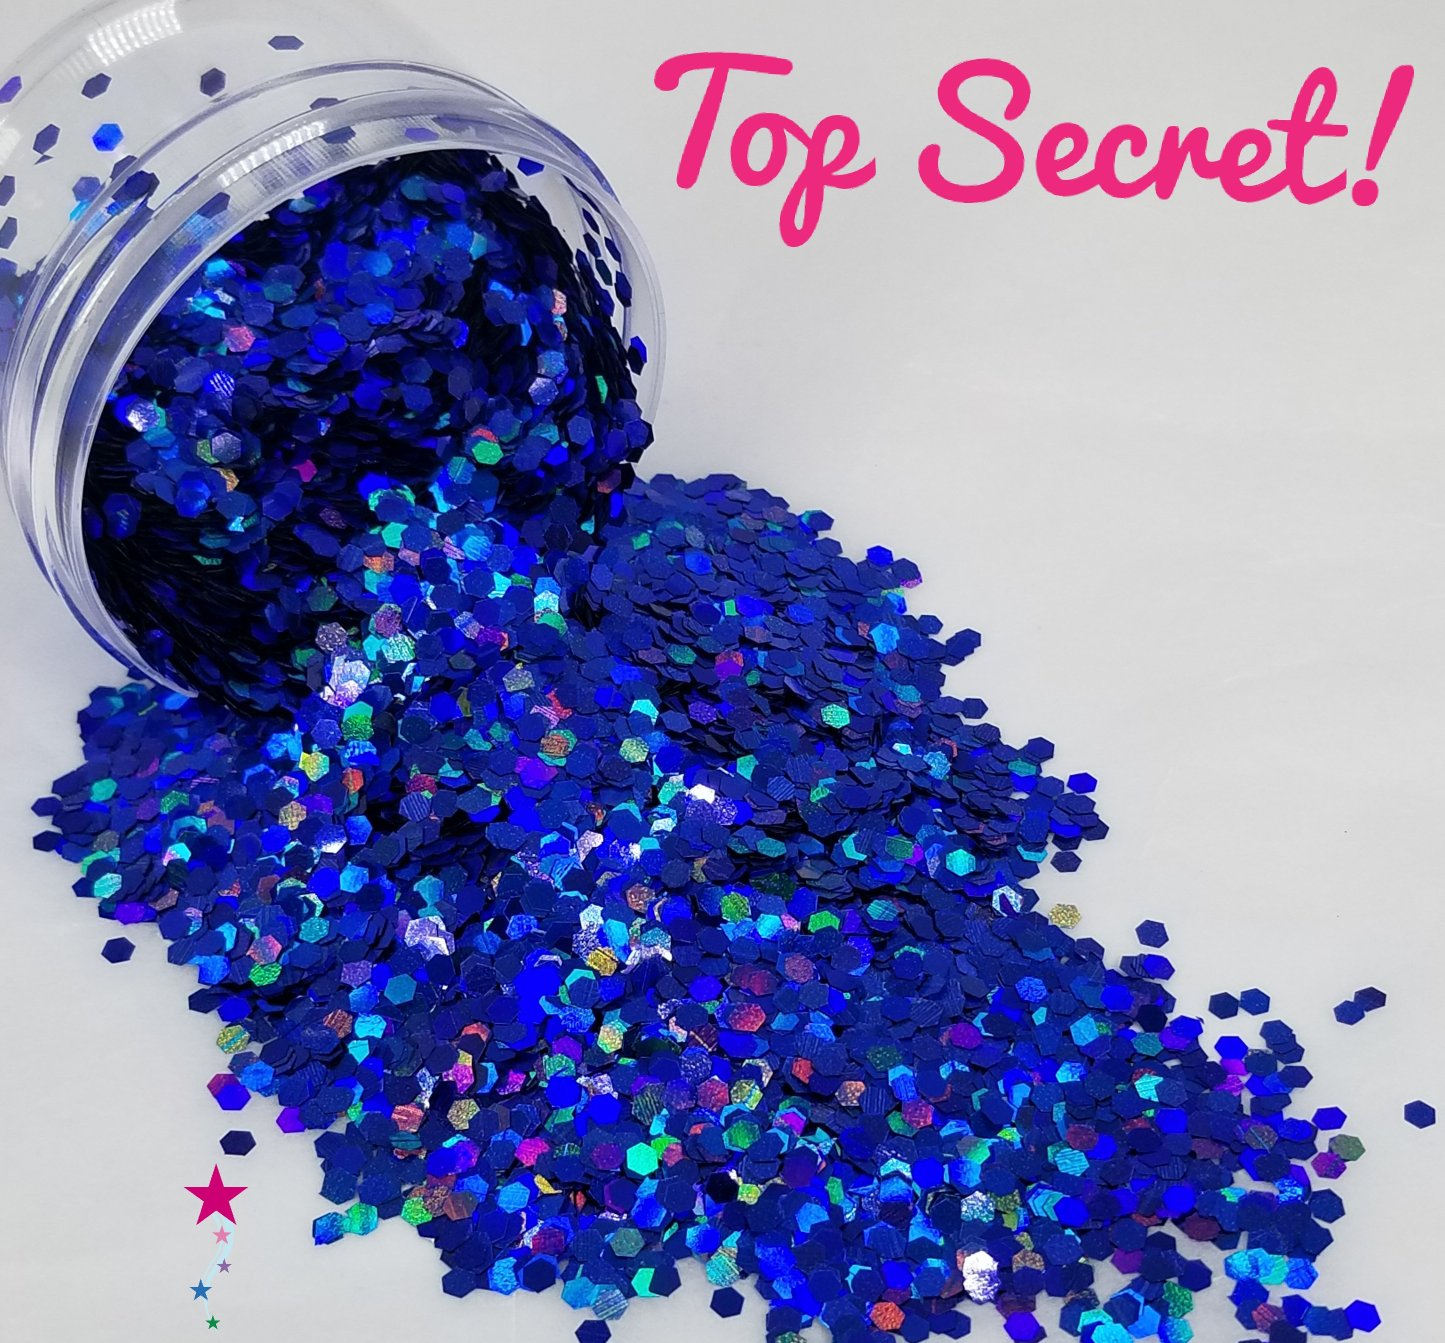 Top Secret! - Glitter - Blue Glitter - Large Blue Holographic